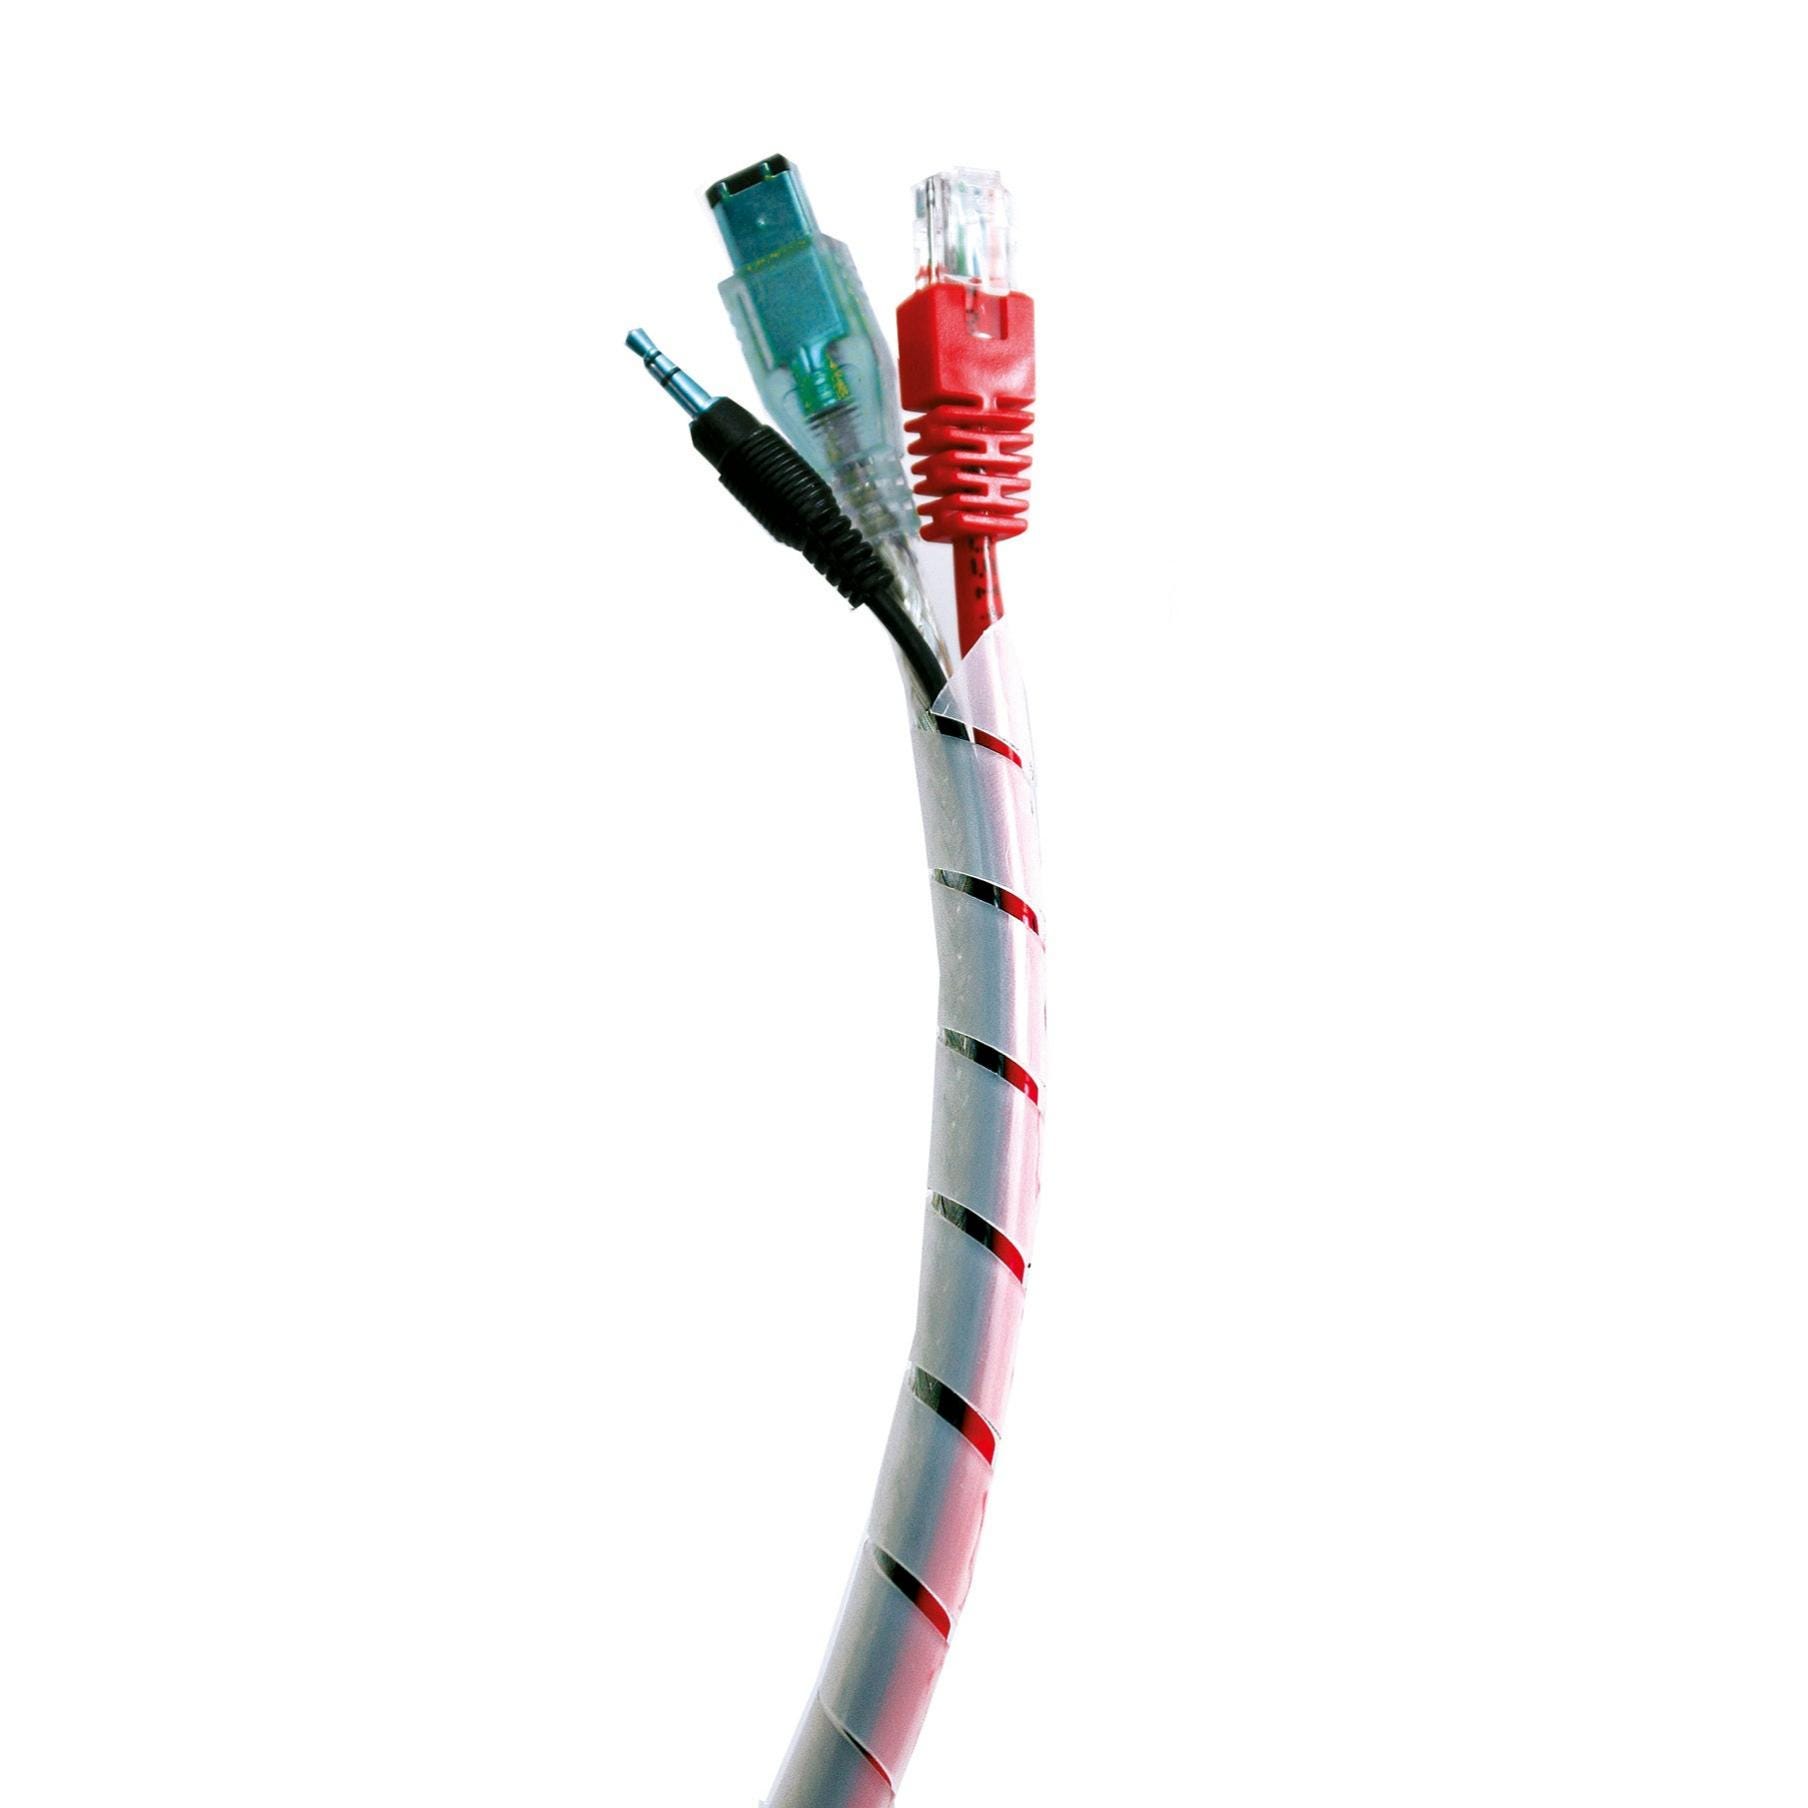 Gaine range-câbles en spirale Diall blanc ø25 mm x 1,1m